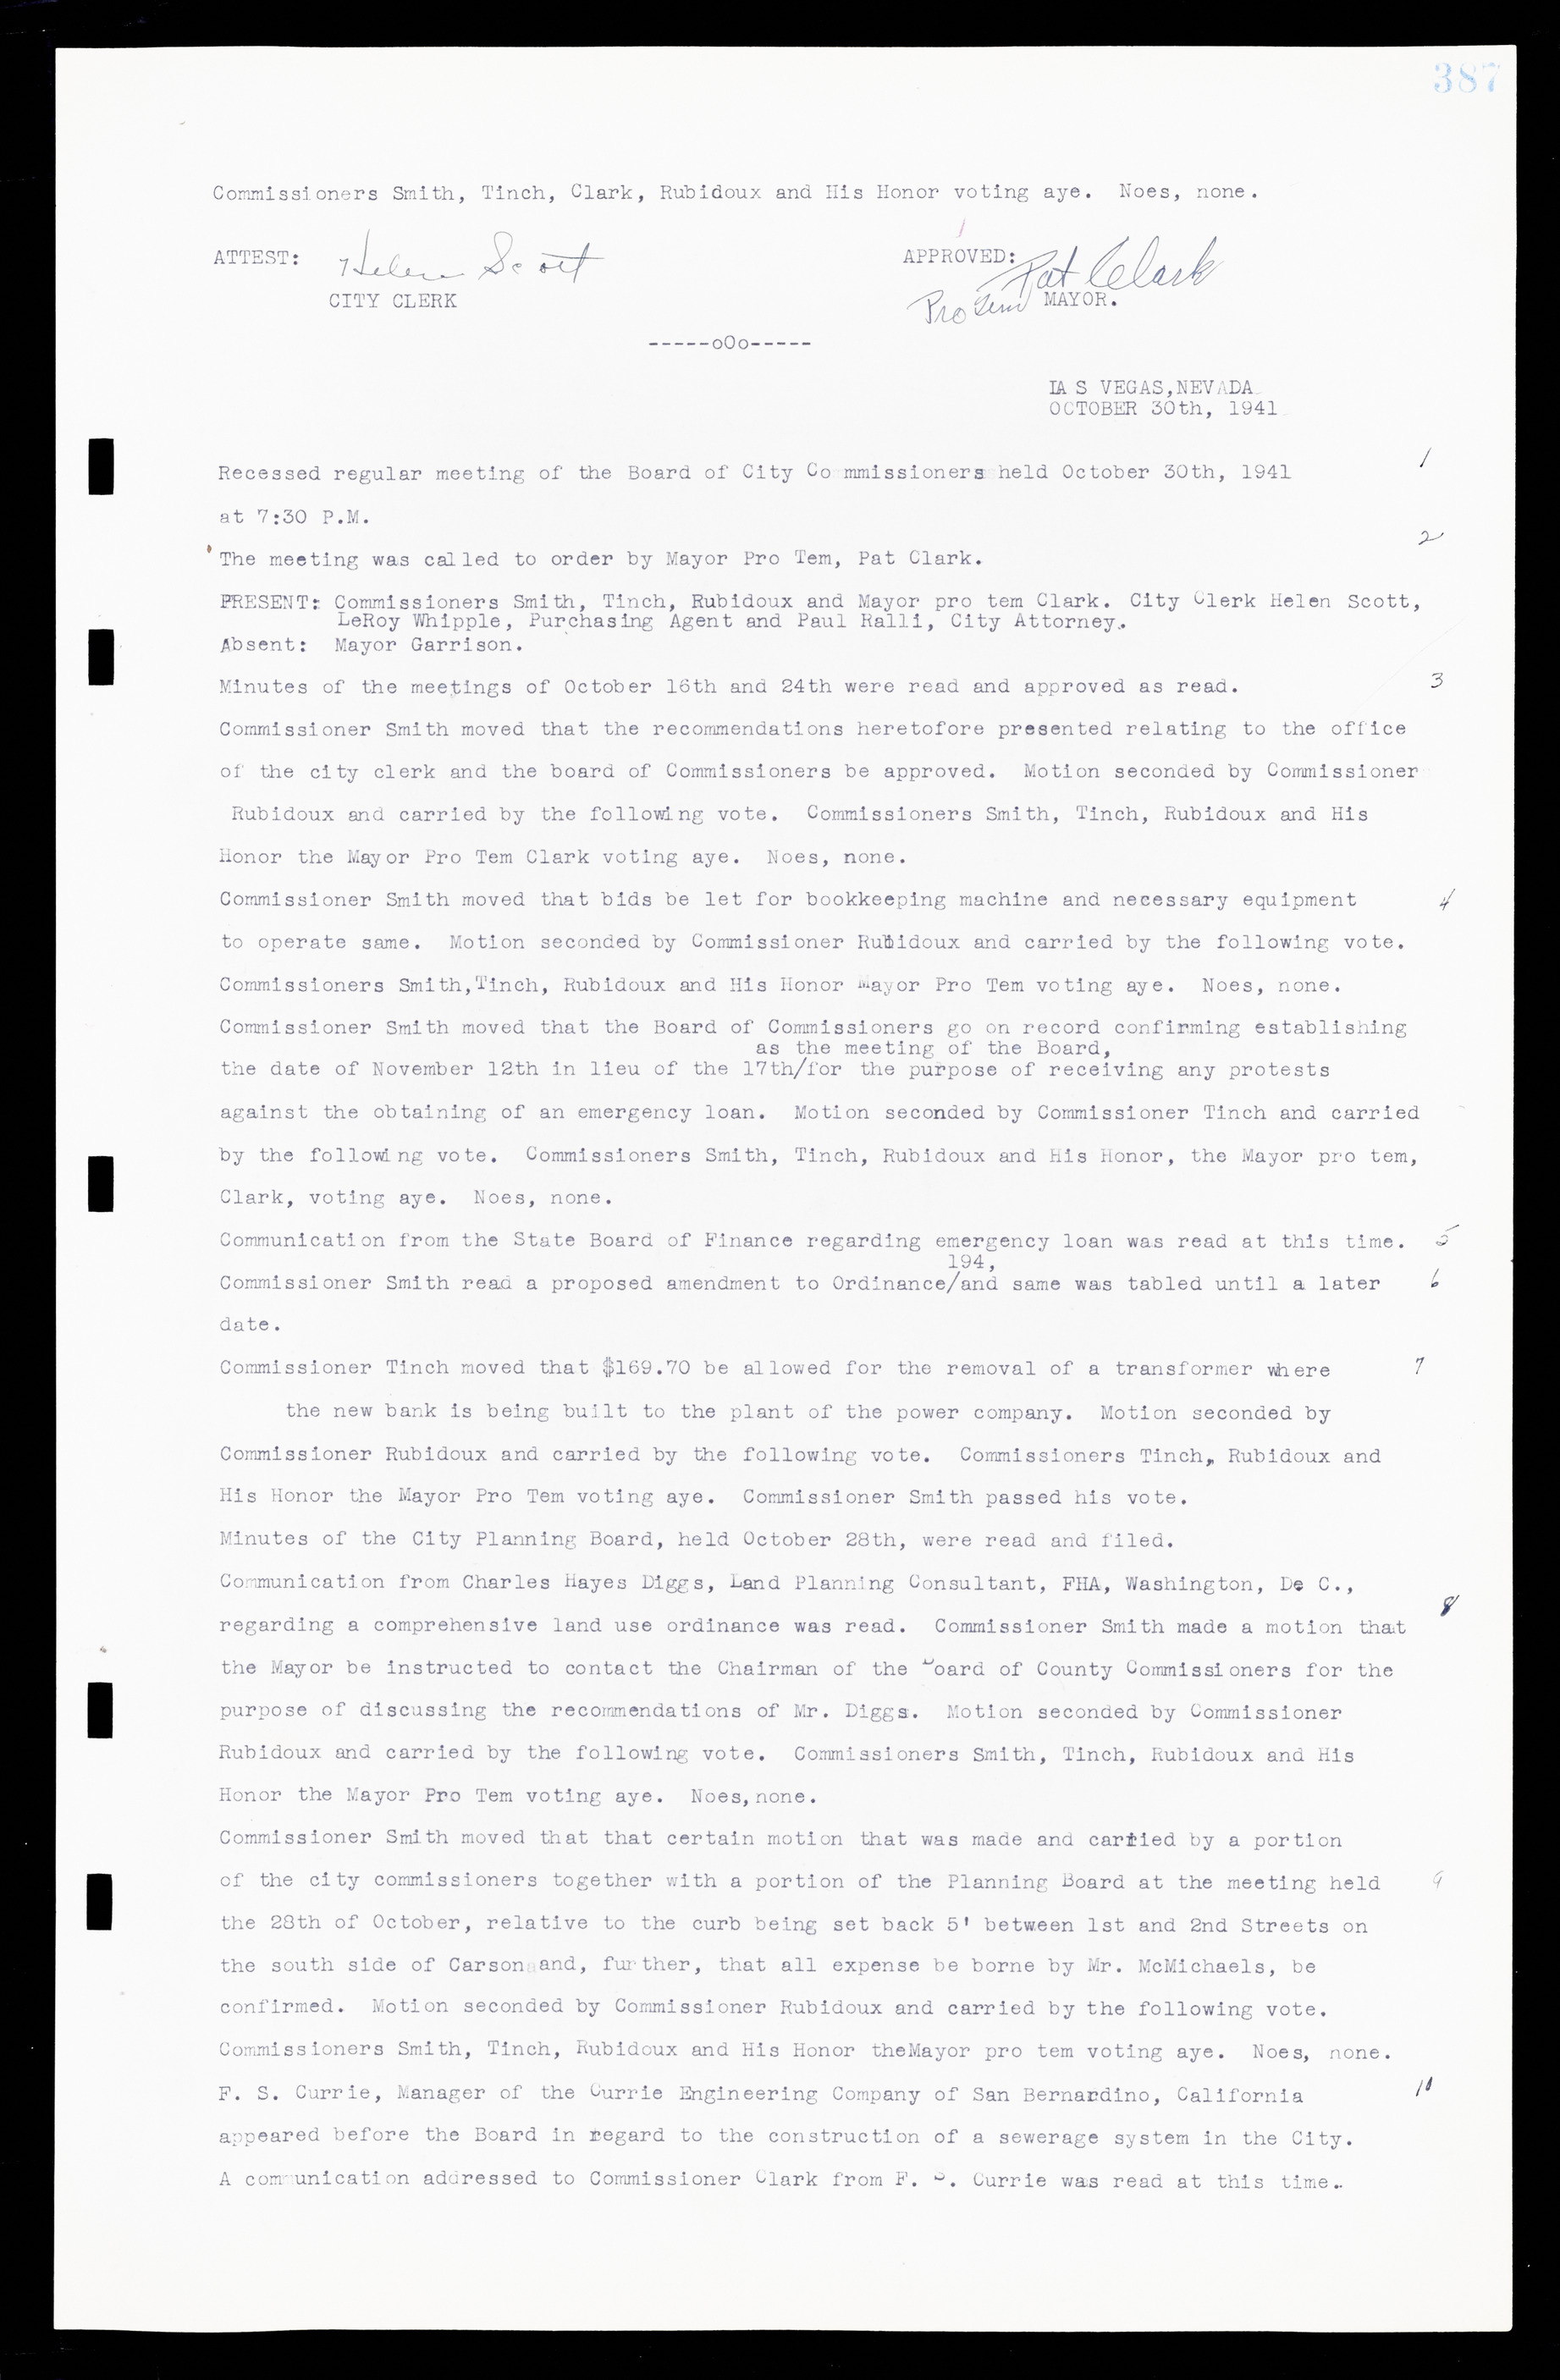 Las Vegas City Commission Minutes, February 17, 1937 to August 4, 1942, lvc000004-413